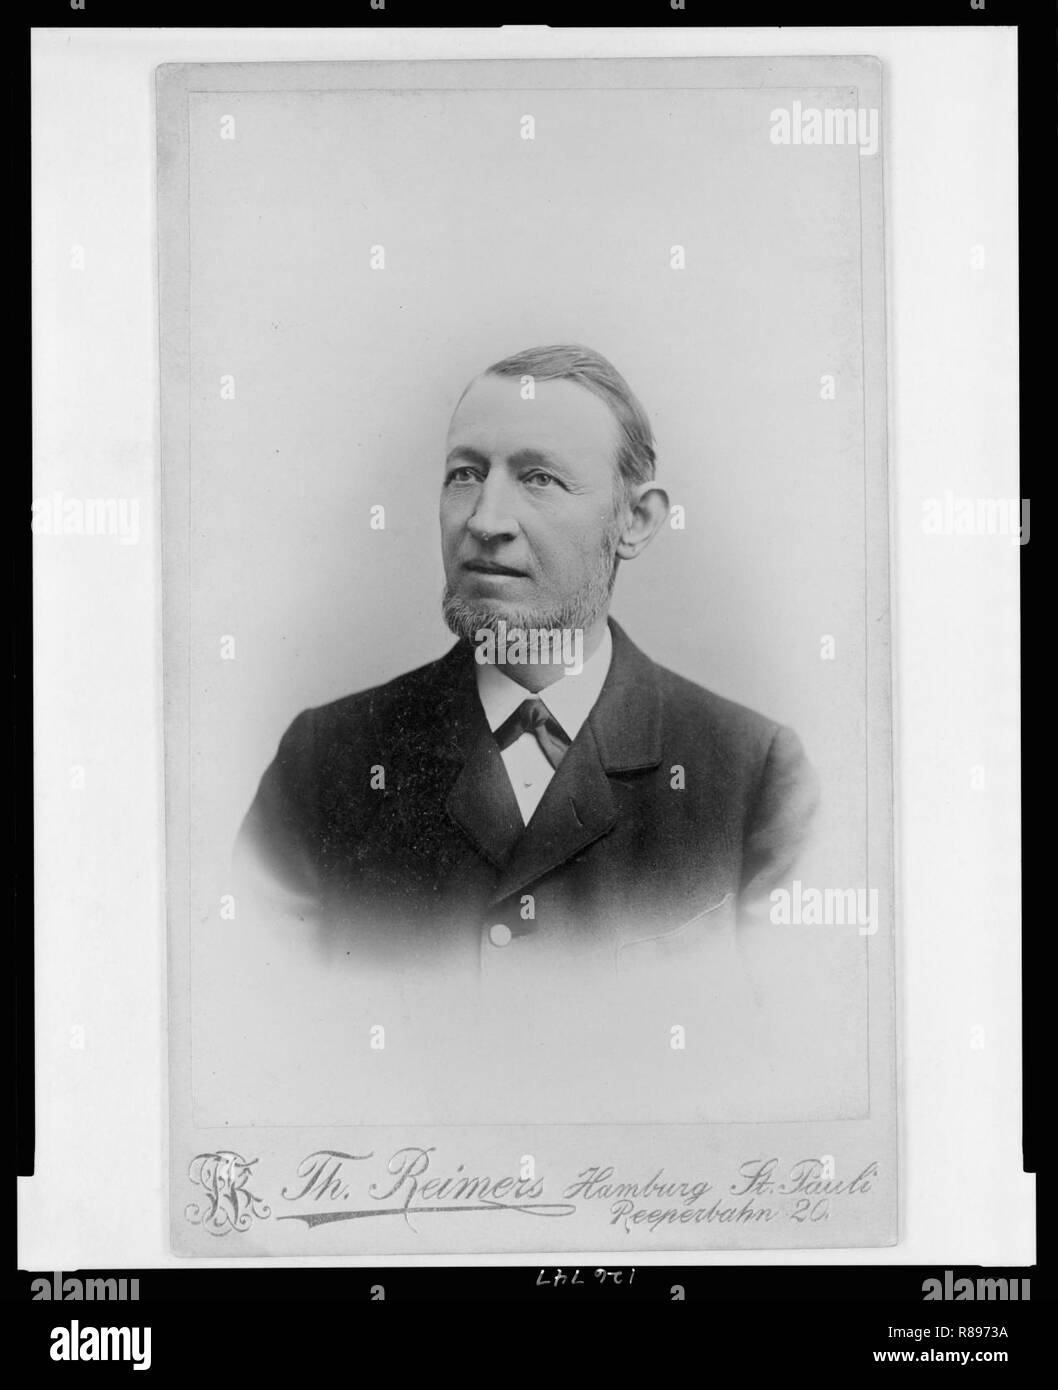 Carl Hagenbeck, head-and-shoulders portrait, facing slightly left) - Th. Reimers, Hamburg, St. Pauli, Reeperbahn 20 Stock Photo